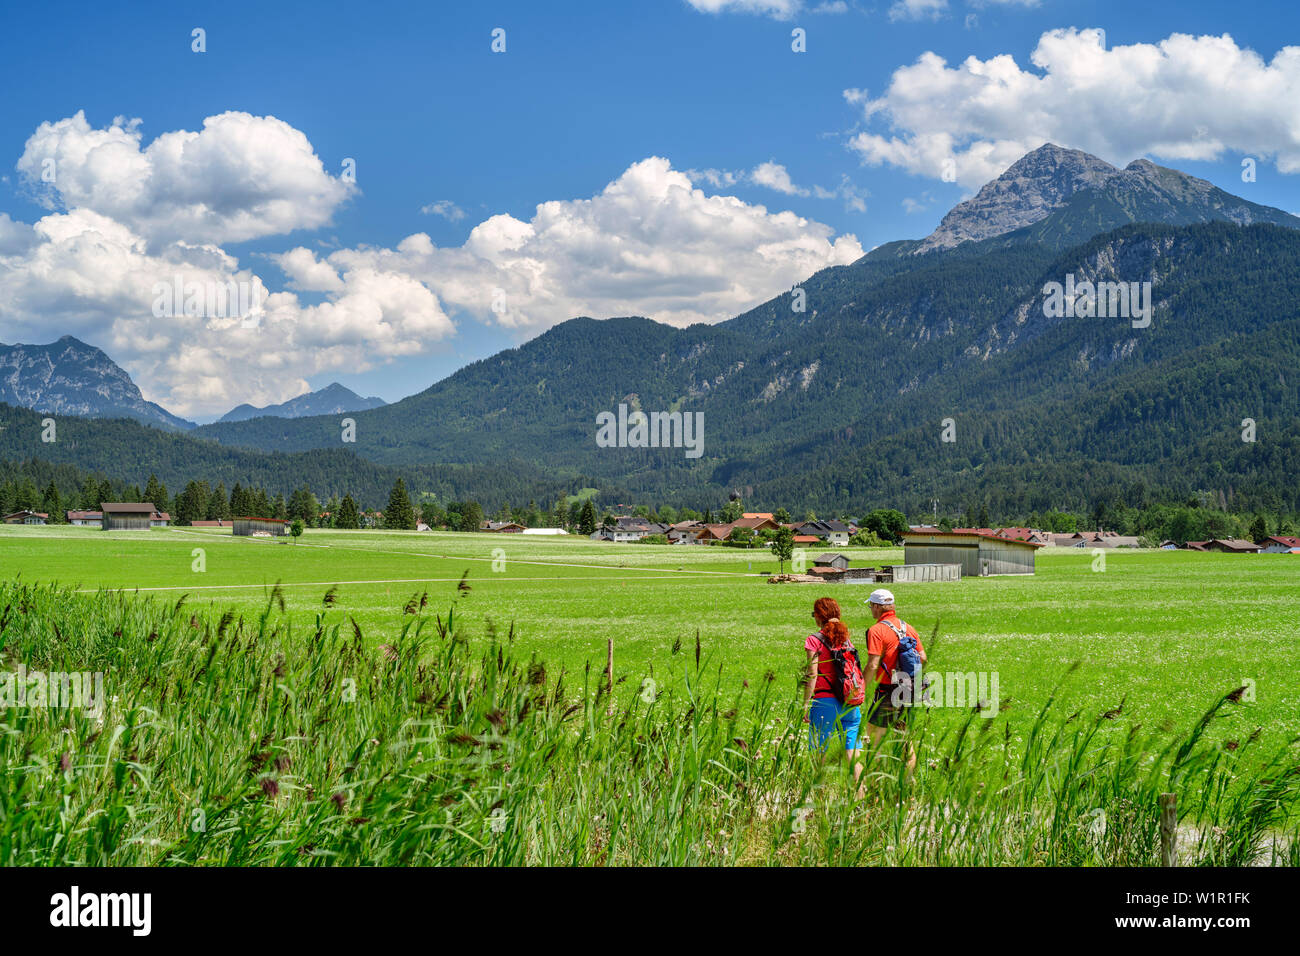 Man and woman hiking on Lechweg, Lechtal Alps in background, Weissenbach, Lechweg, valley of Lech, Tyrol, Austria Stock Photo